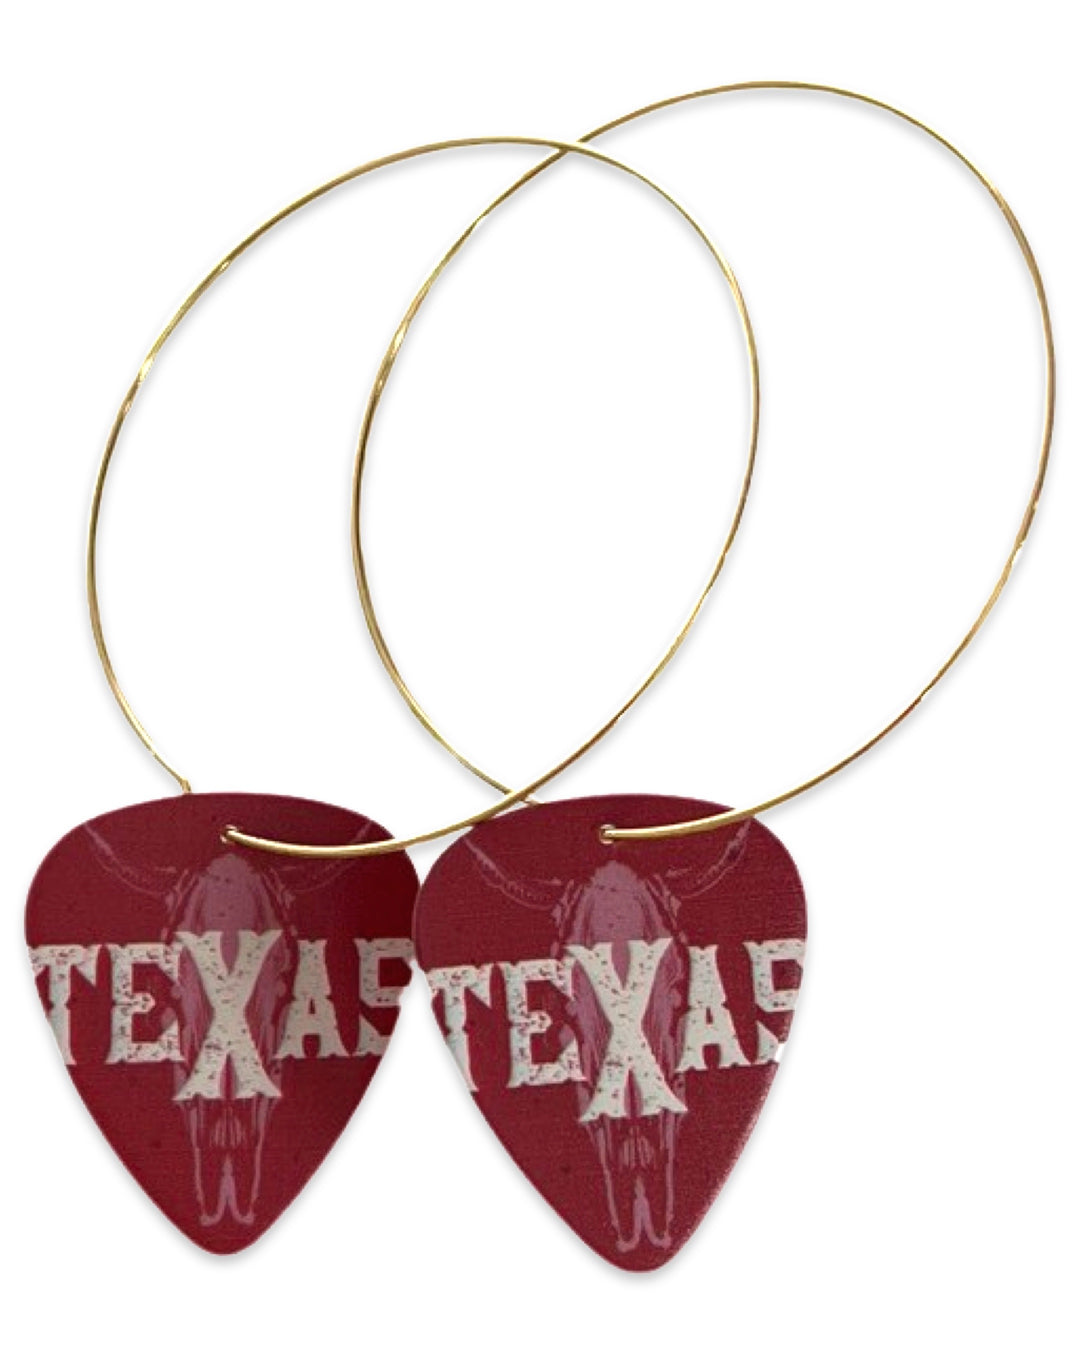 Texas Maroon Skull Reversible Single Guitar Pick Earrings